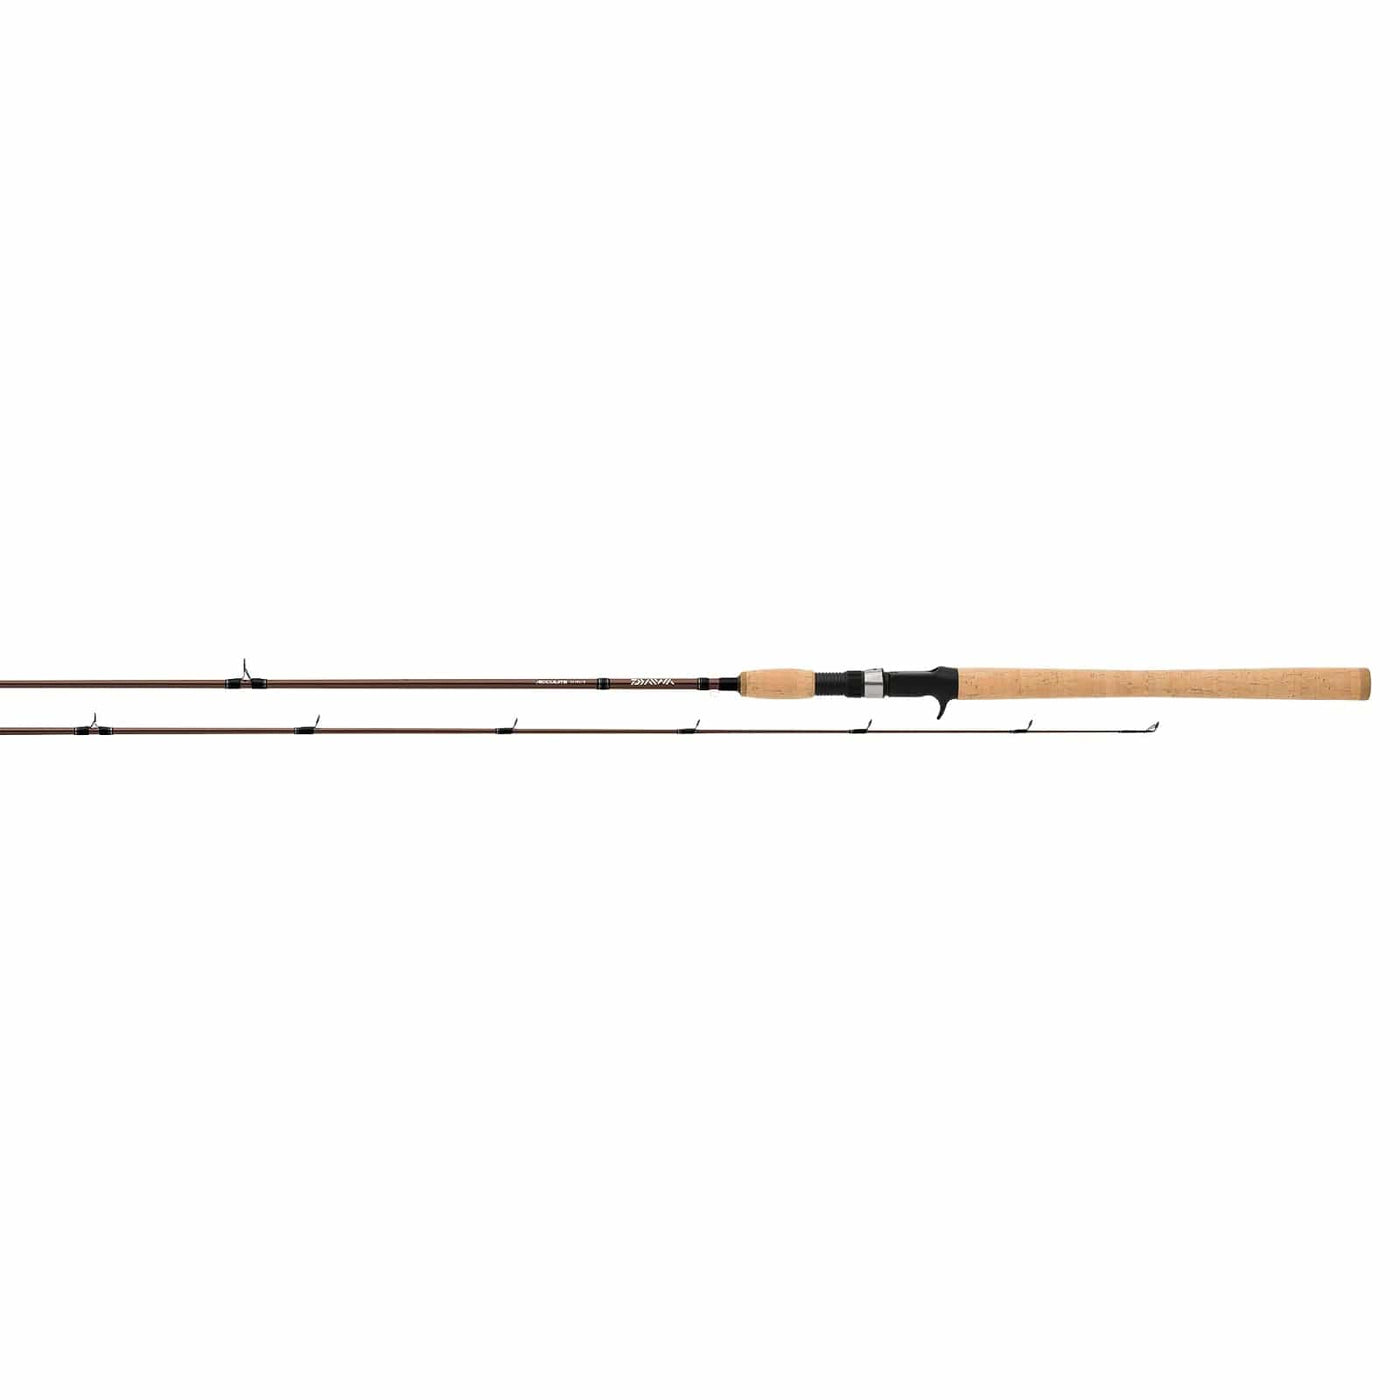 Daiwa Daiwa Acculite Spinning Rod ACLT862MHFS 8 ft 6 in 2 pc Fishing